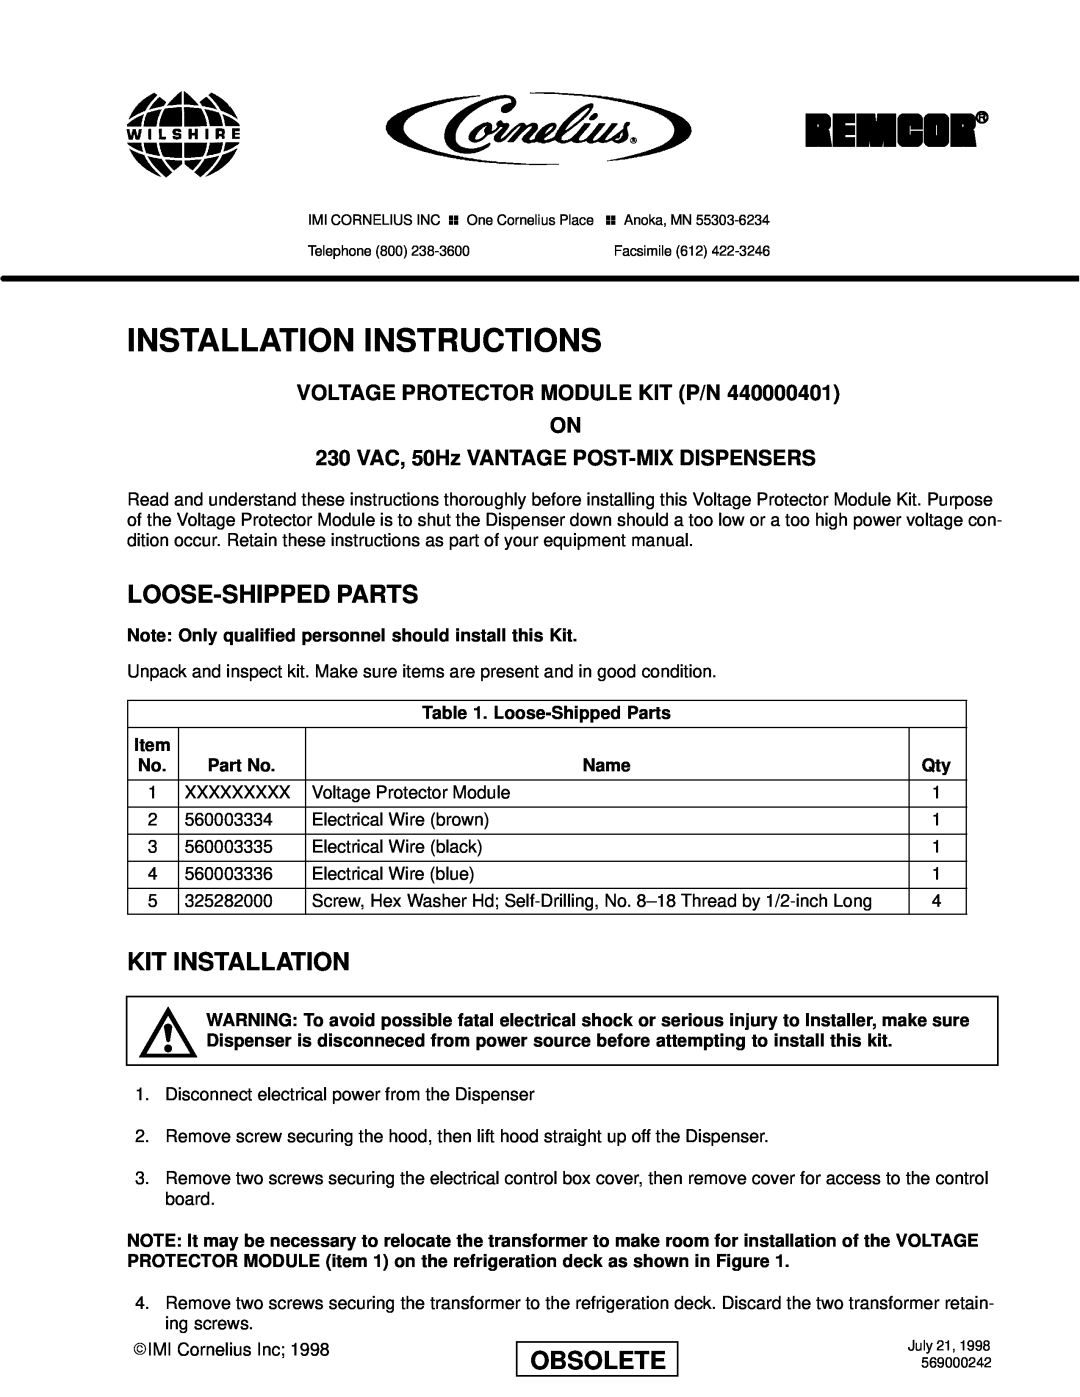 Cornelius 230 VAC installation instructions Installation Instructions, Loose-Shippedparts, Kit Installation, Obsolete 